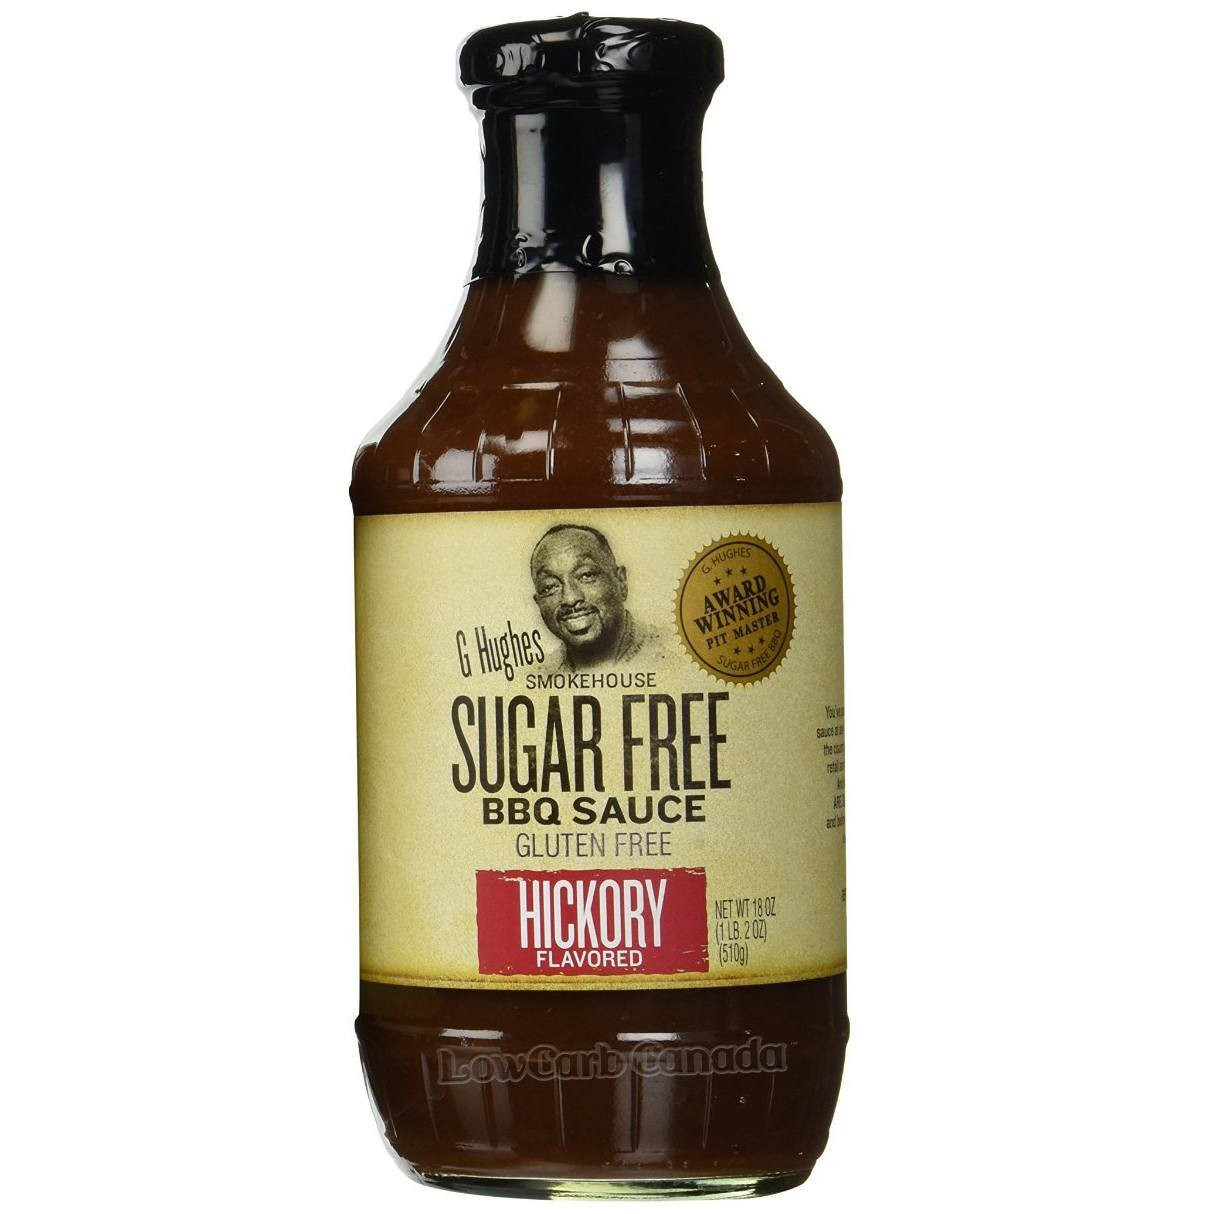 G Hughes Sugar Free Bbq Sauce
 G Hughes Smokehouse Sugar Free BBQ Sauce Hickory 18